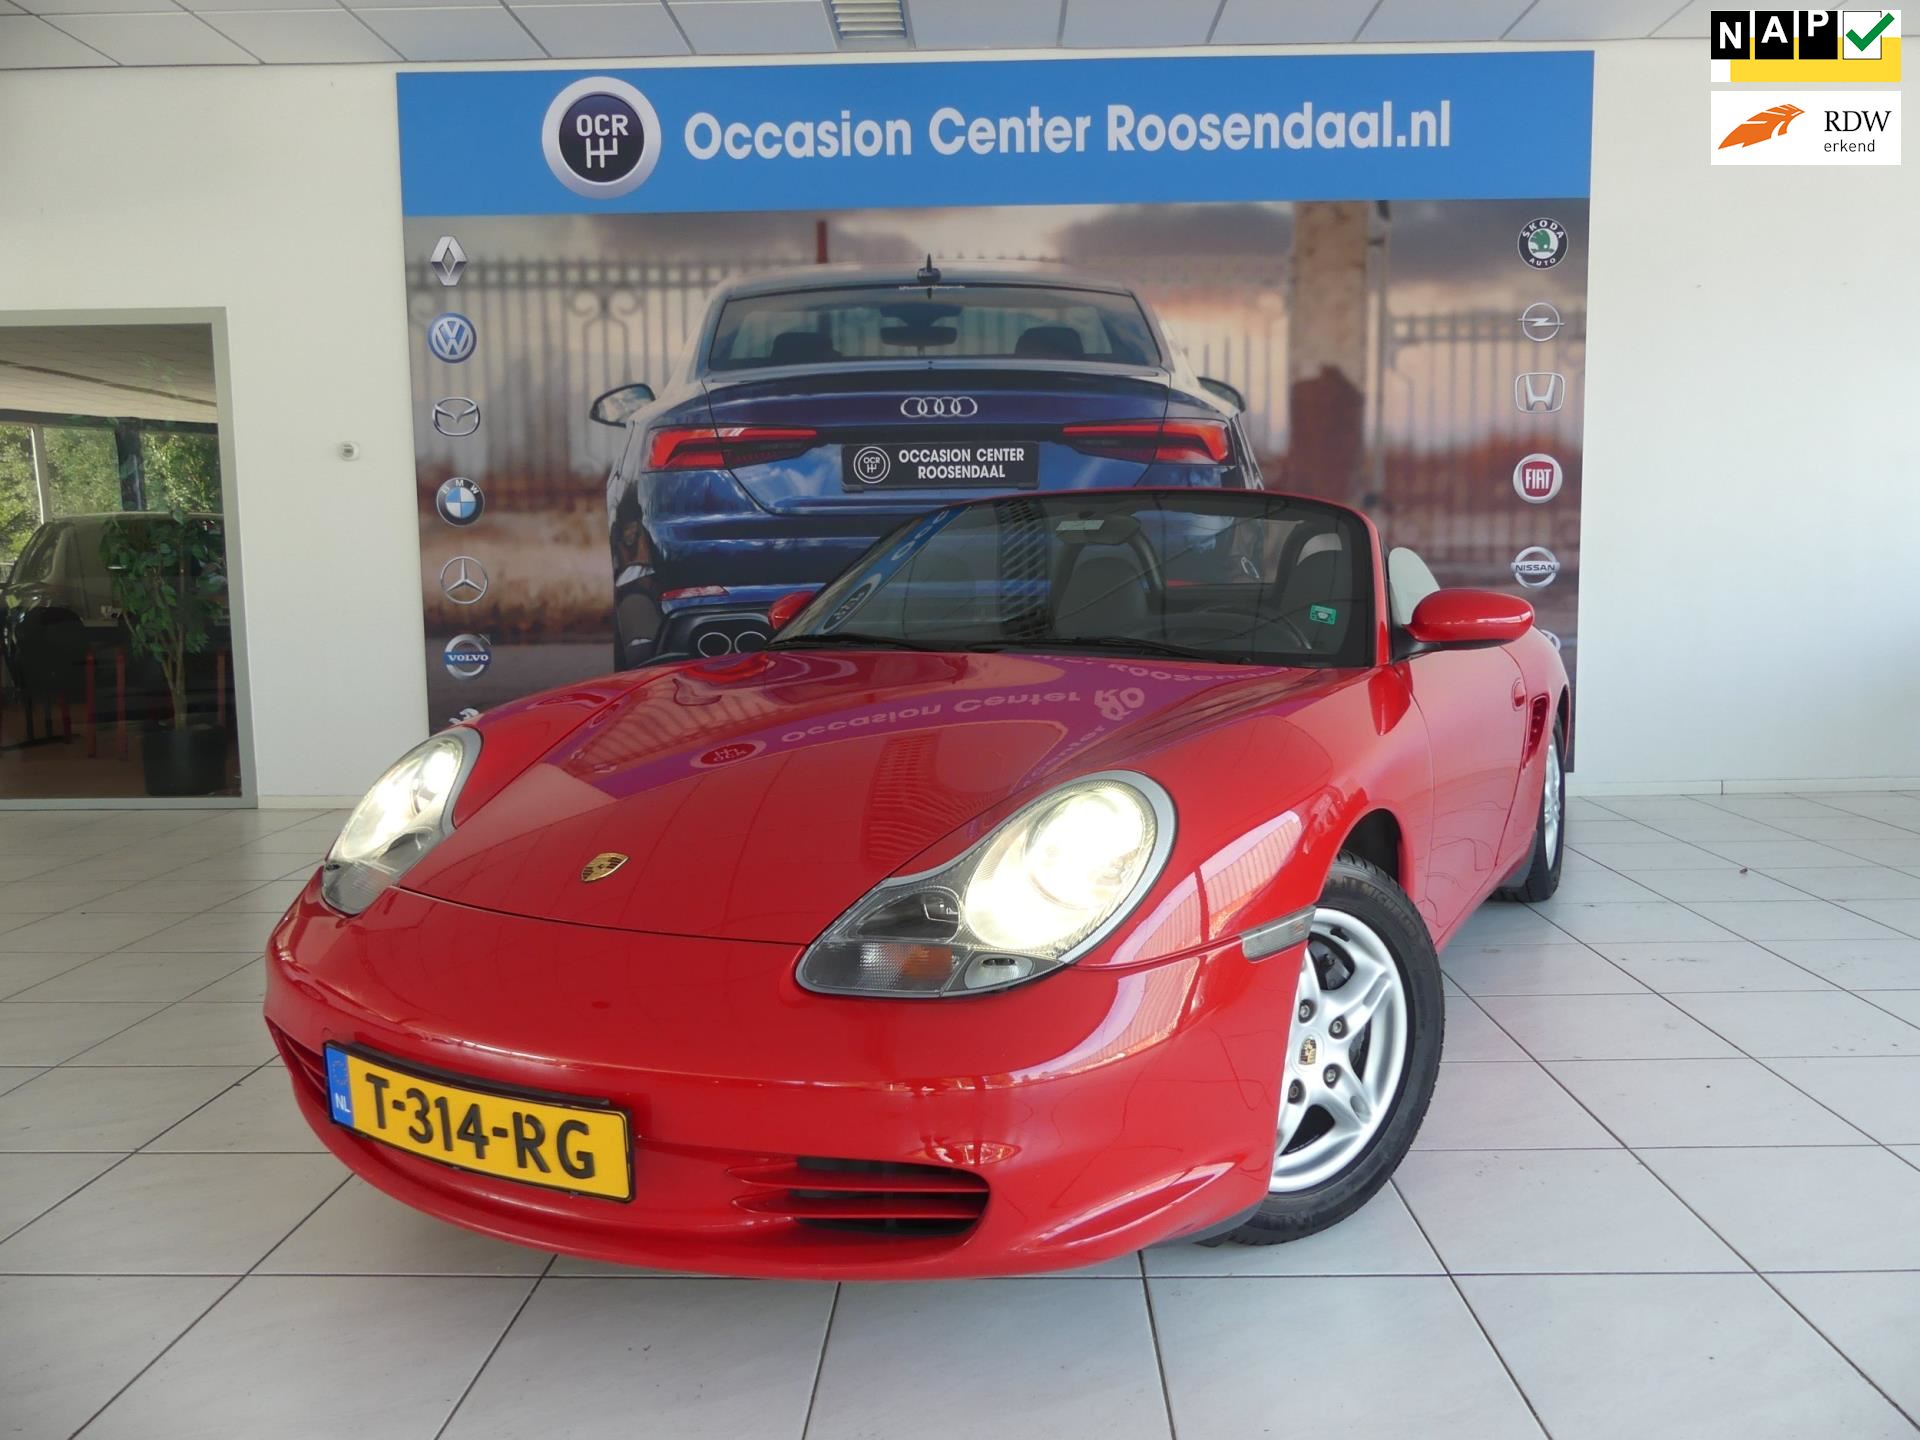 Porsche BOXSTER occasion - Occasion Center Roosendaal